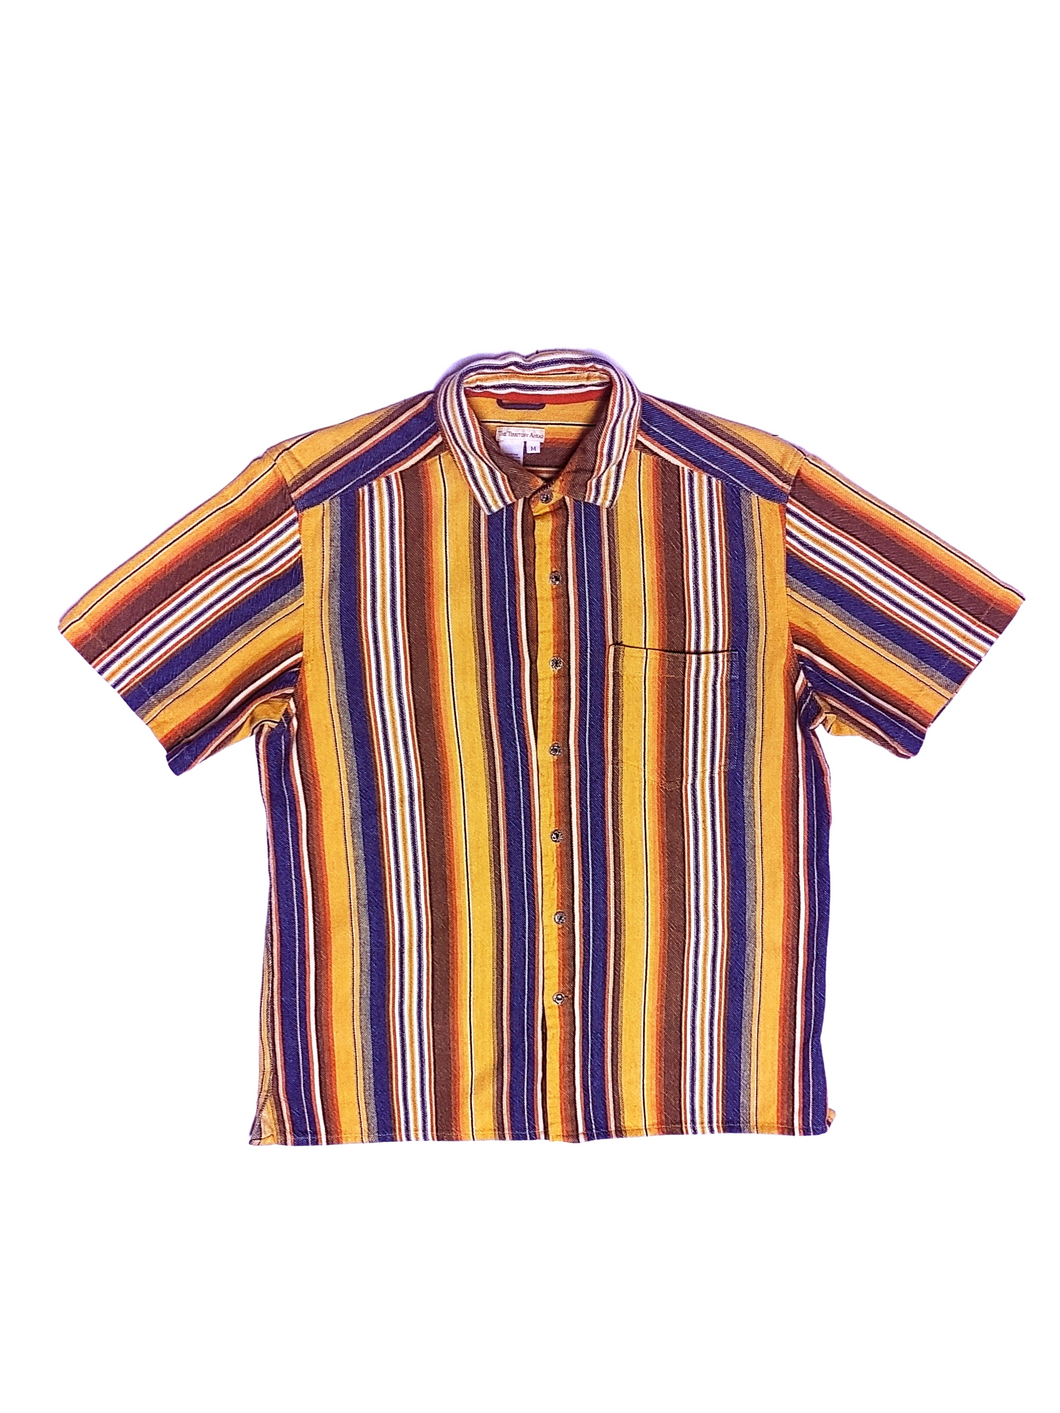 80s Vertical Stripey Stripe Shirt - Size M